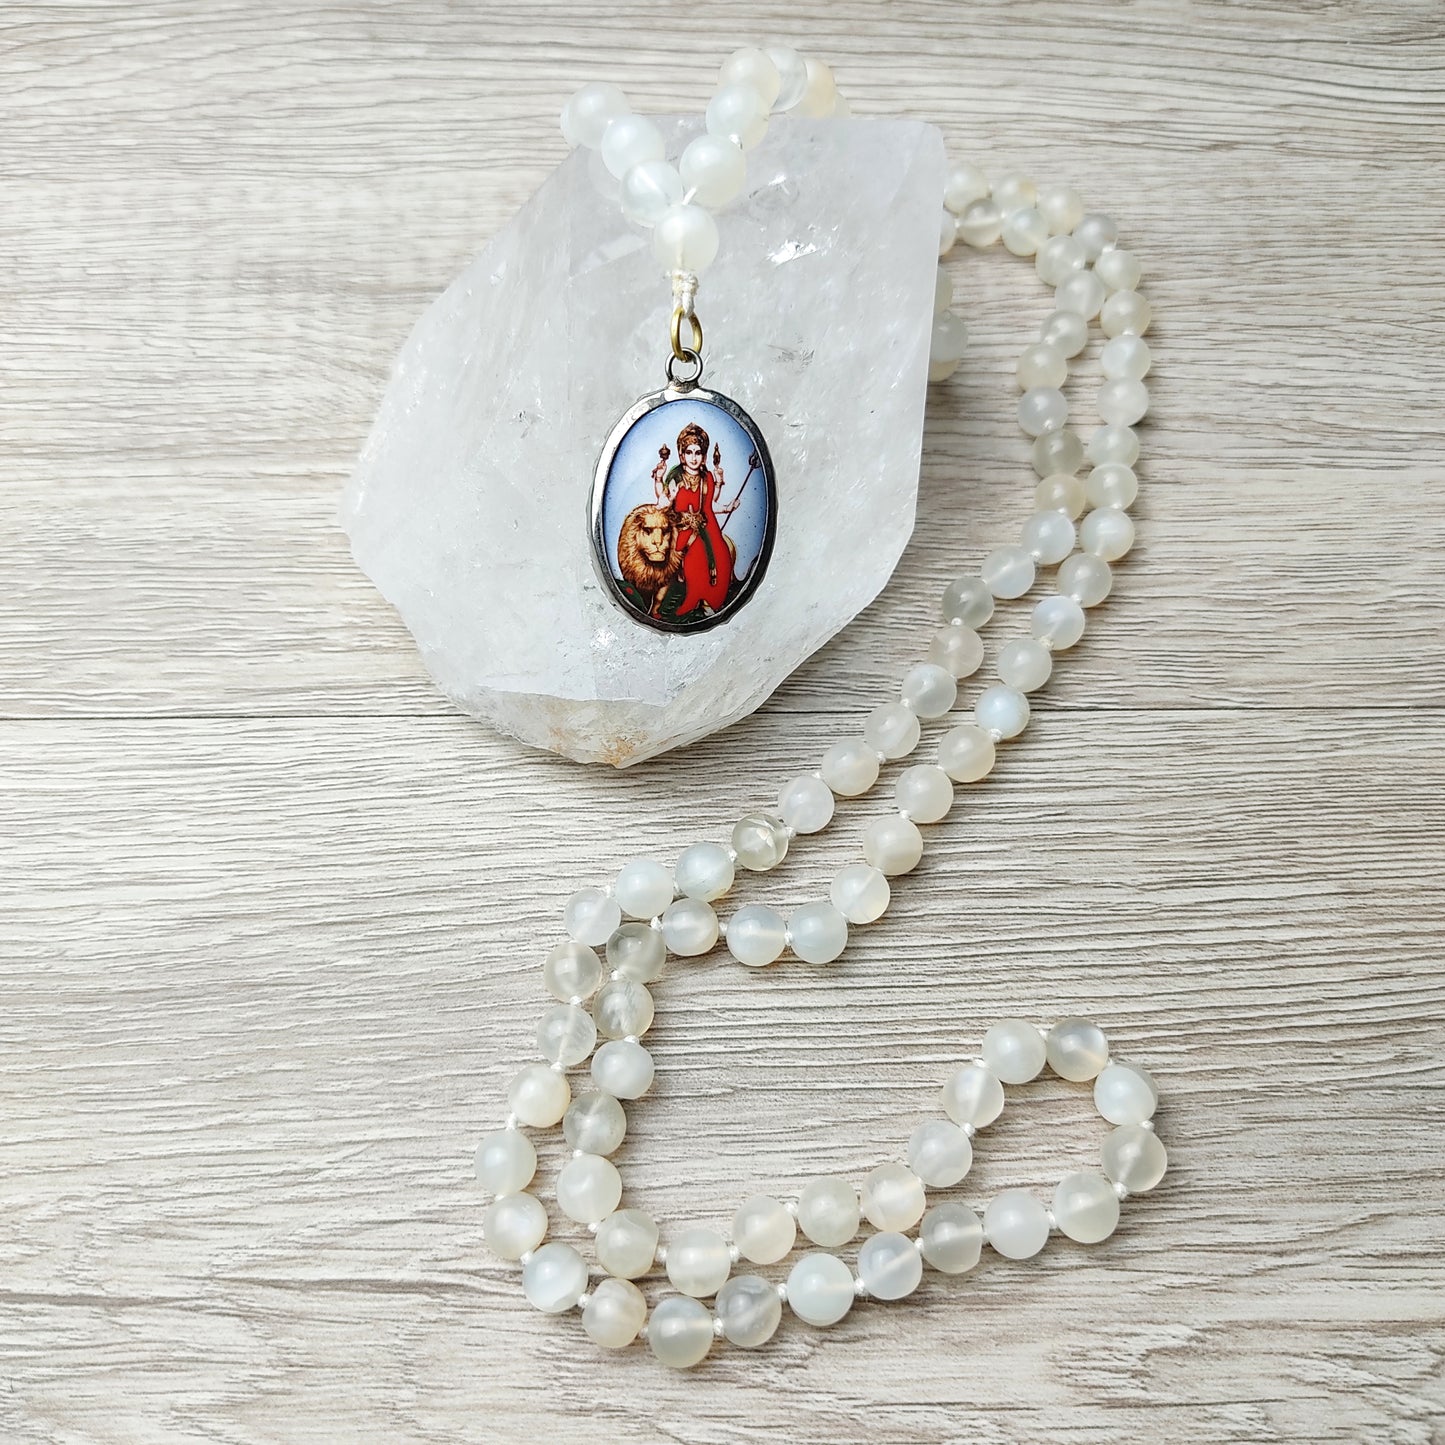 durga goddess pendant moonstone beads necklace gift